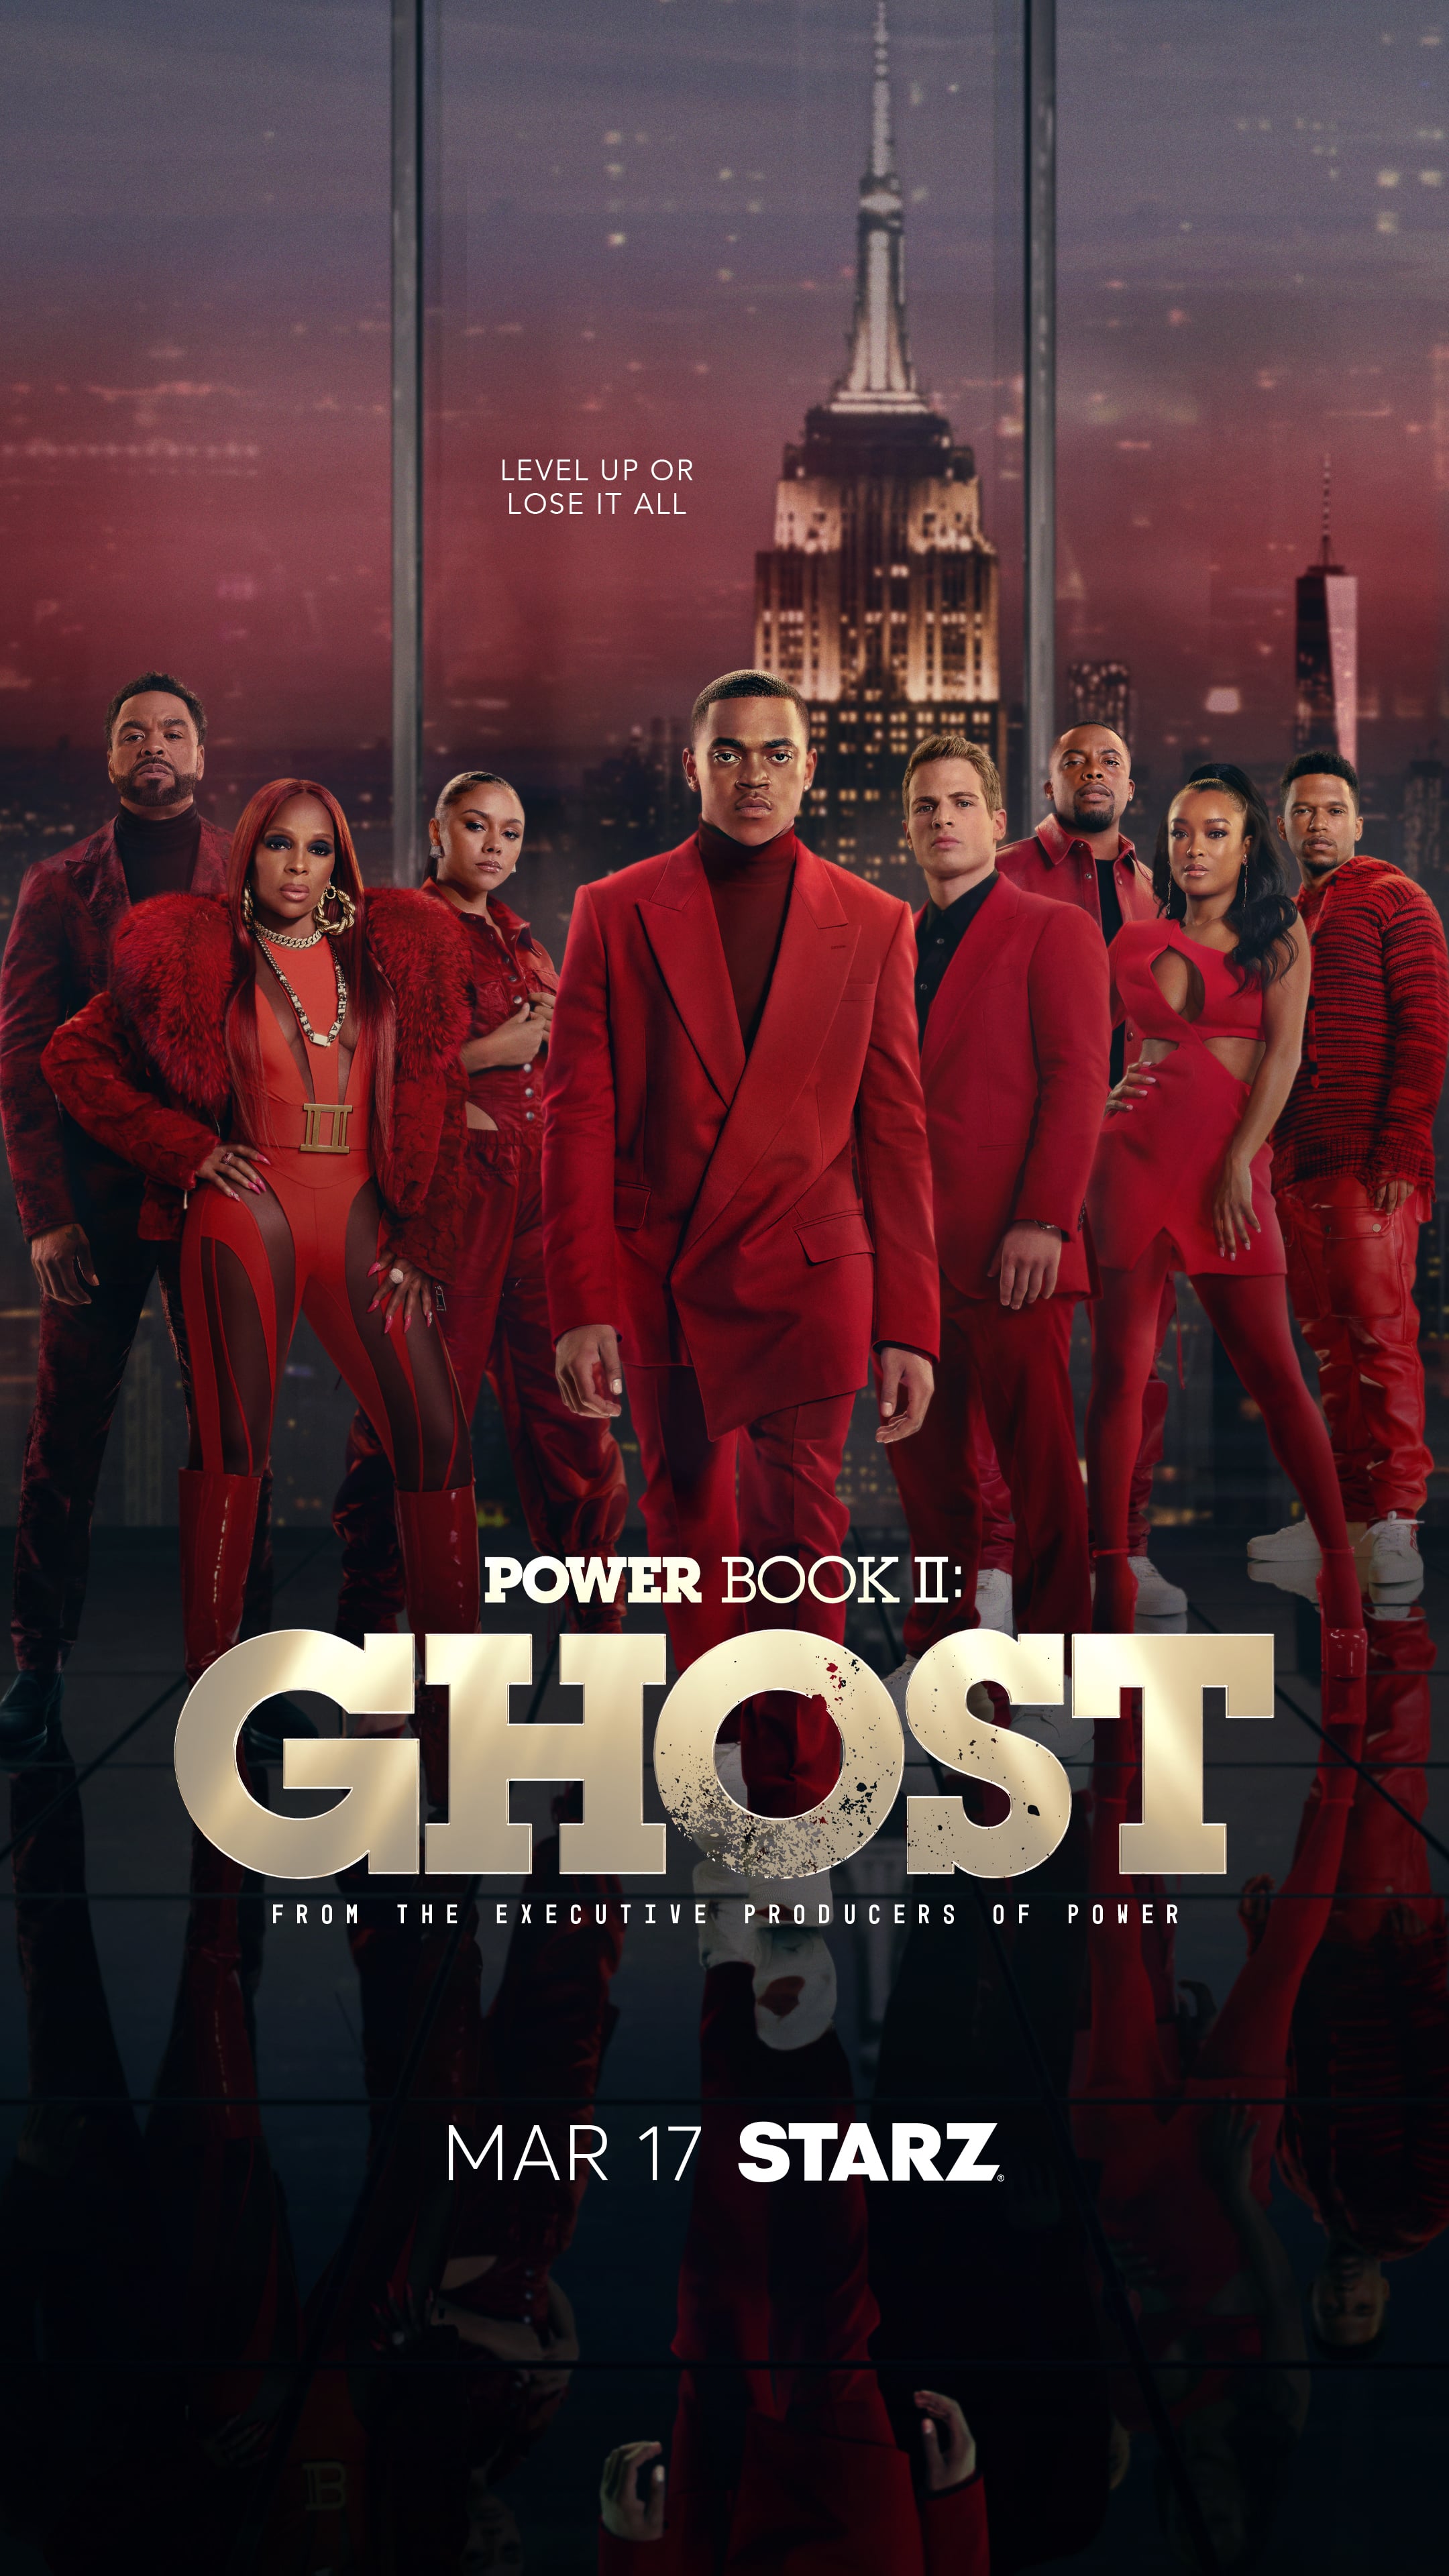 Power Book II: Ghost' Season 3 Premiere Date Revealed in New Teaser